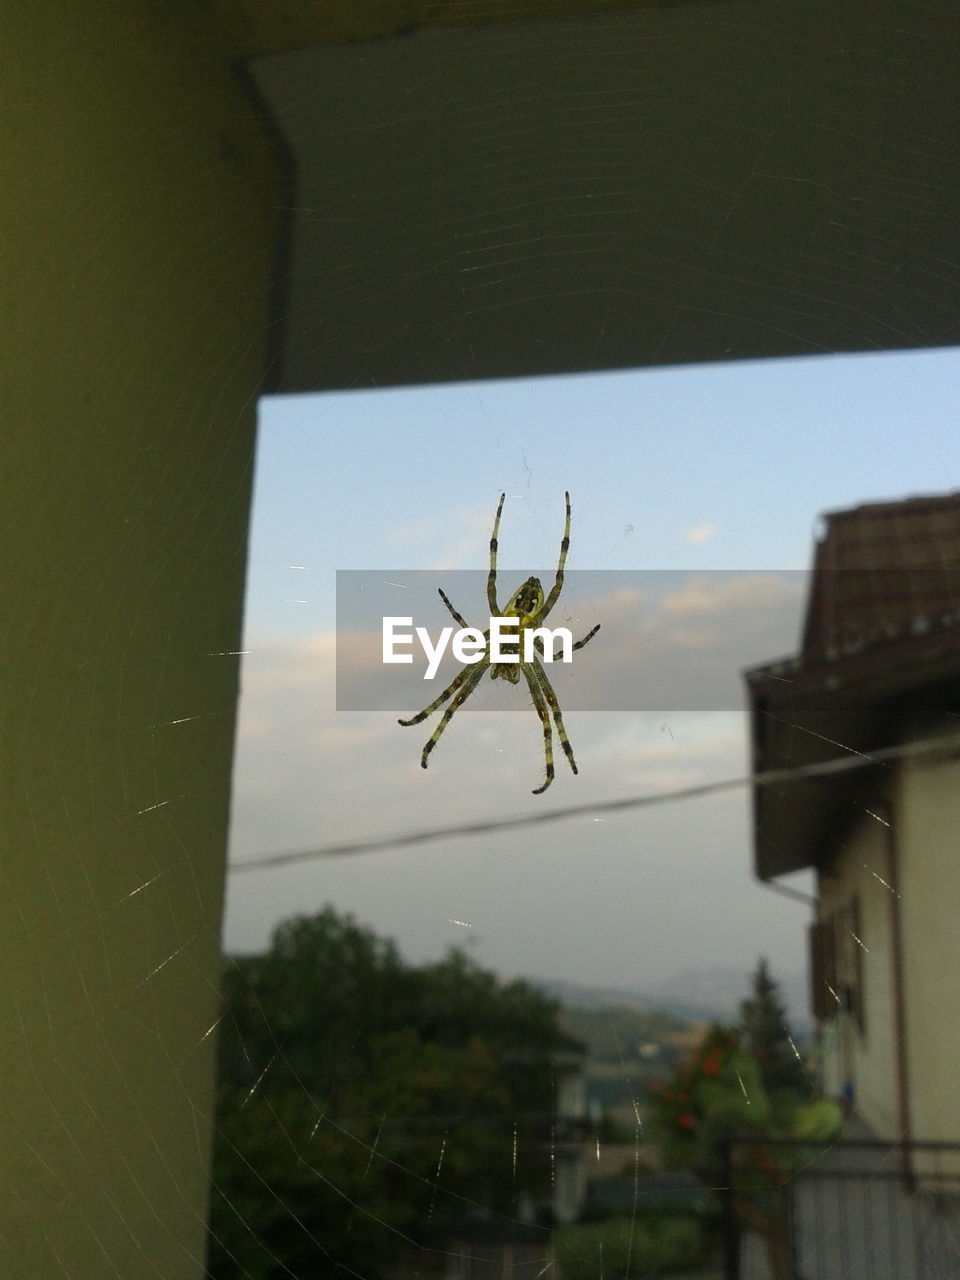 Close-up of spider on window